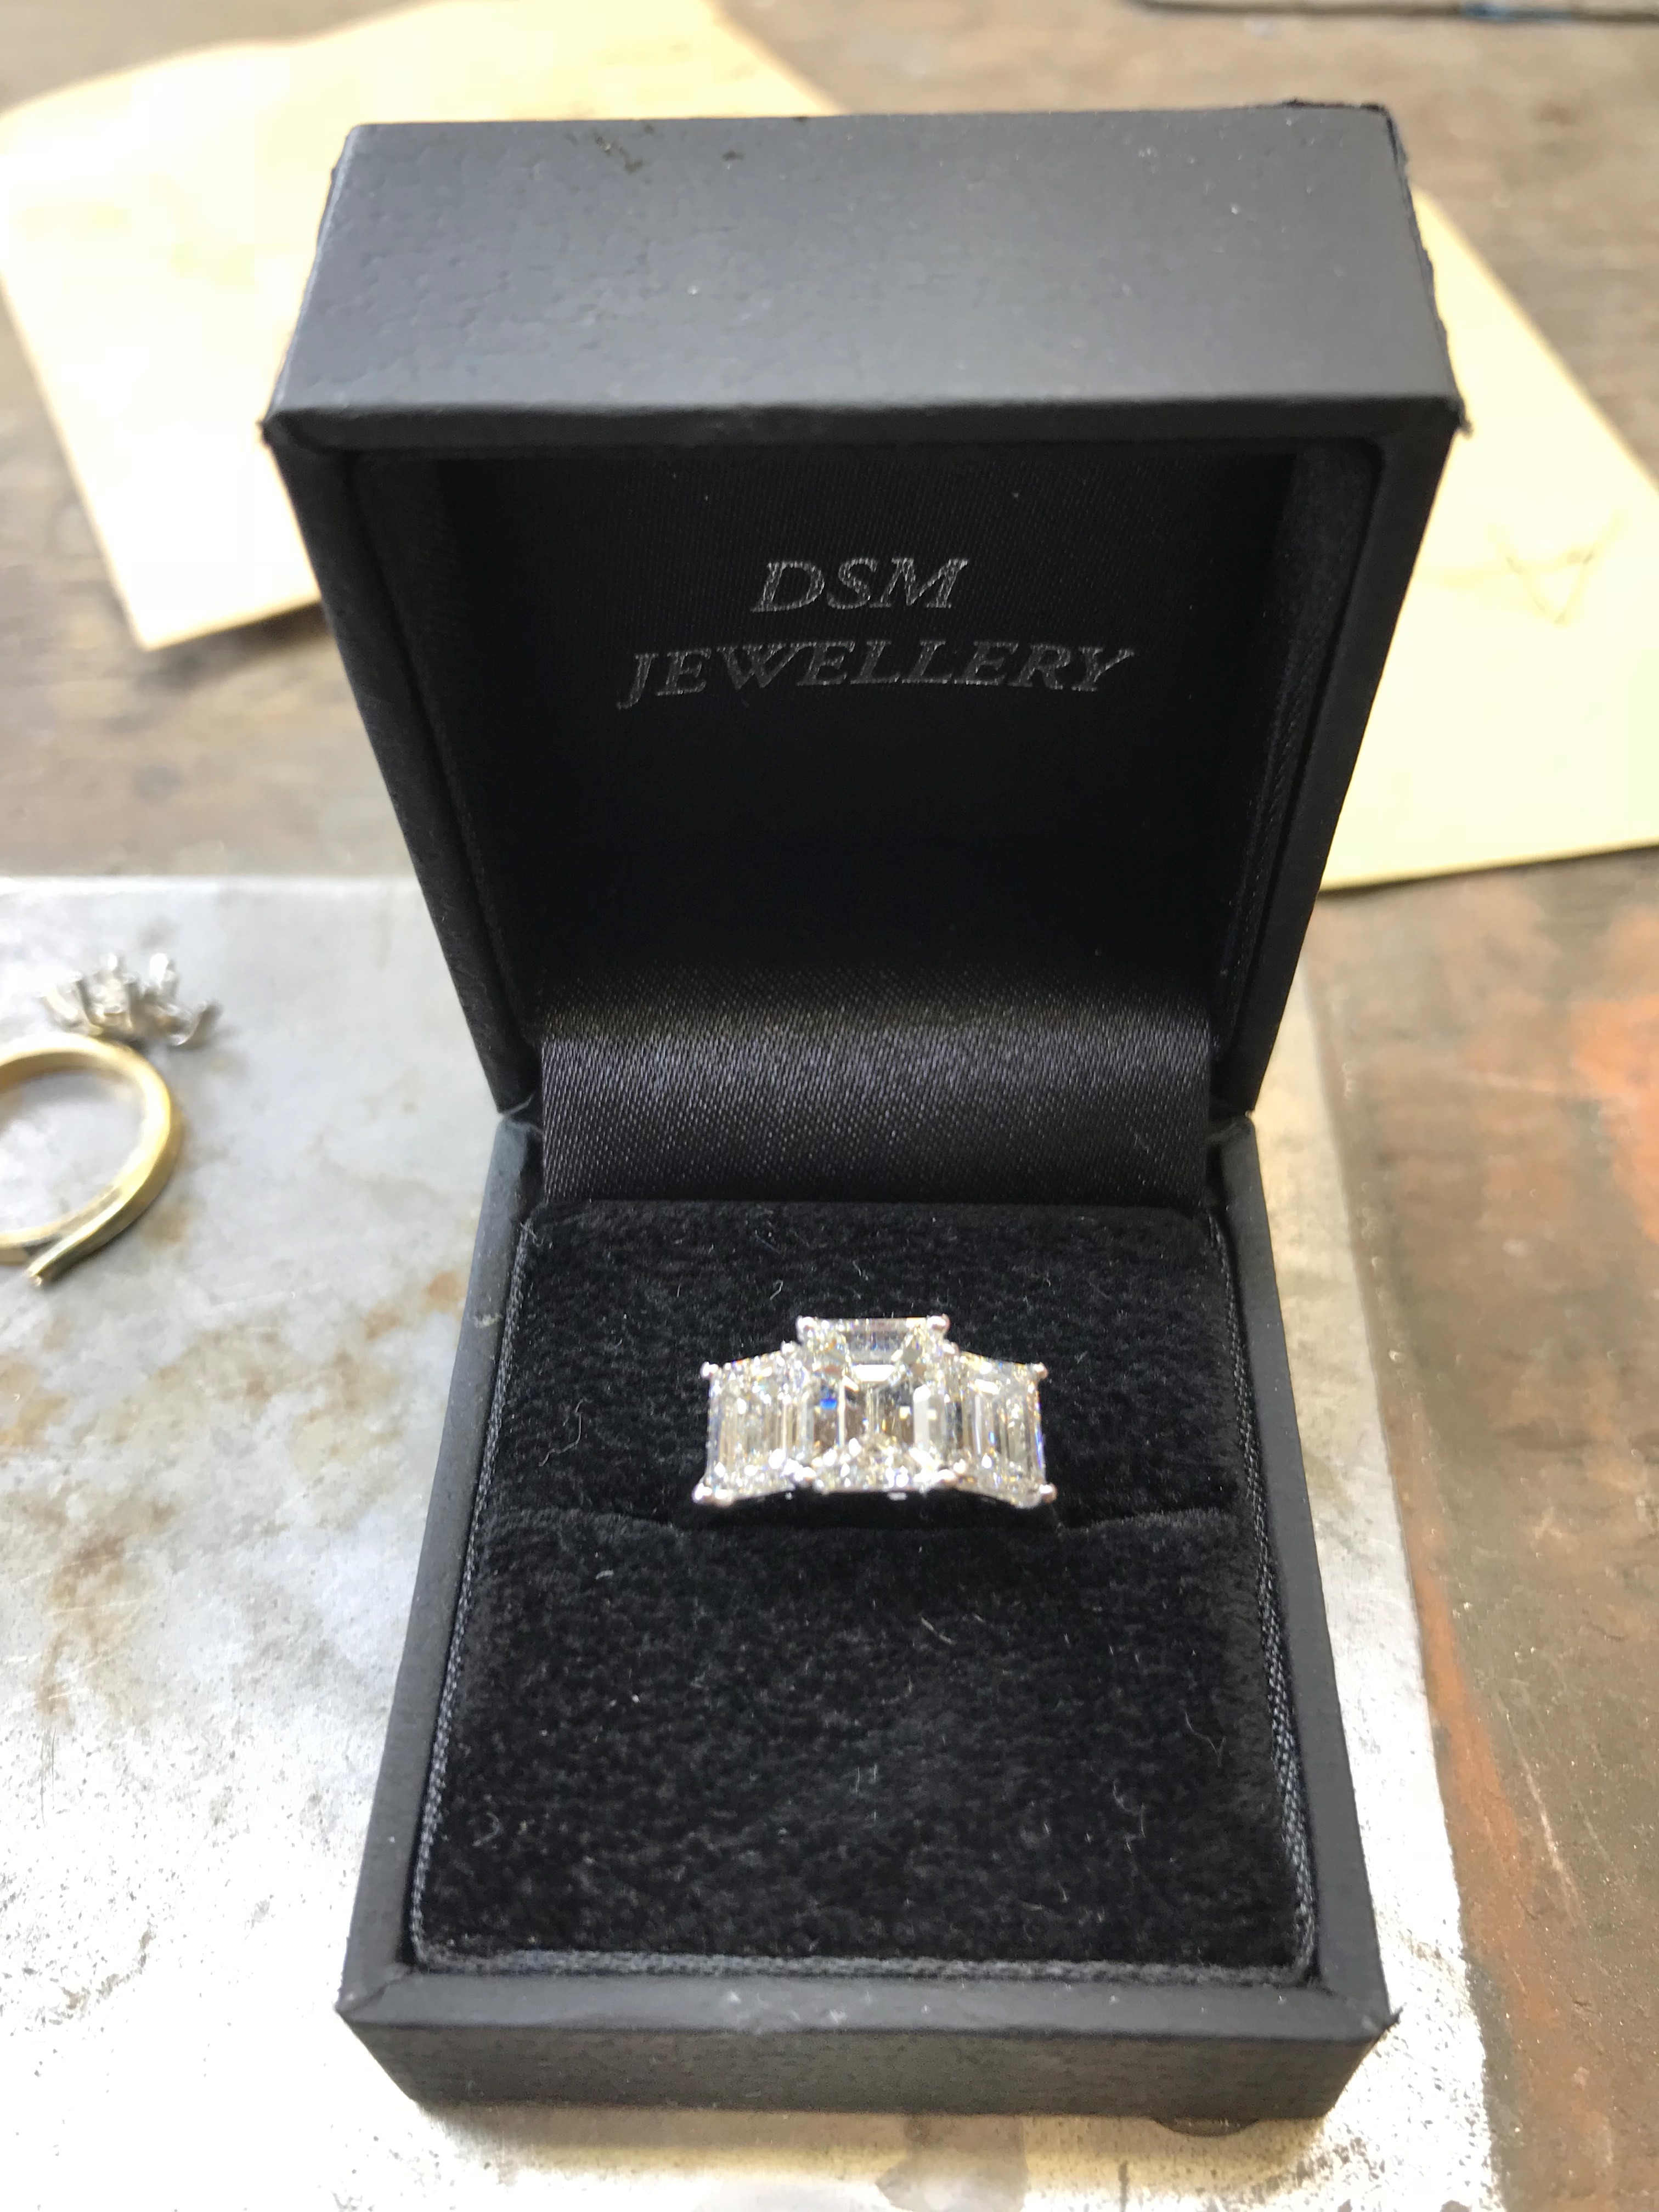 DSM Jewellery